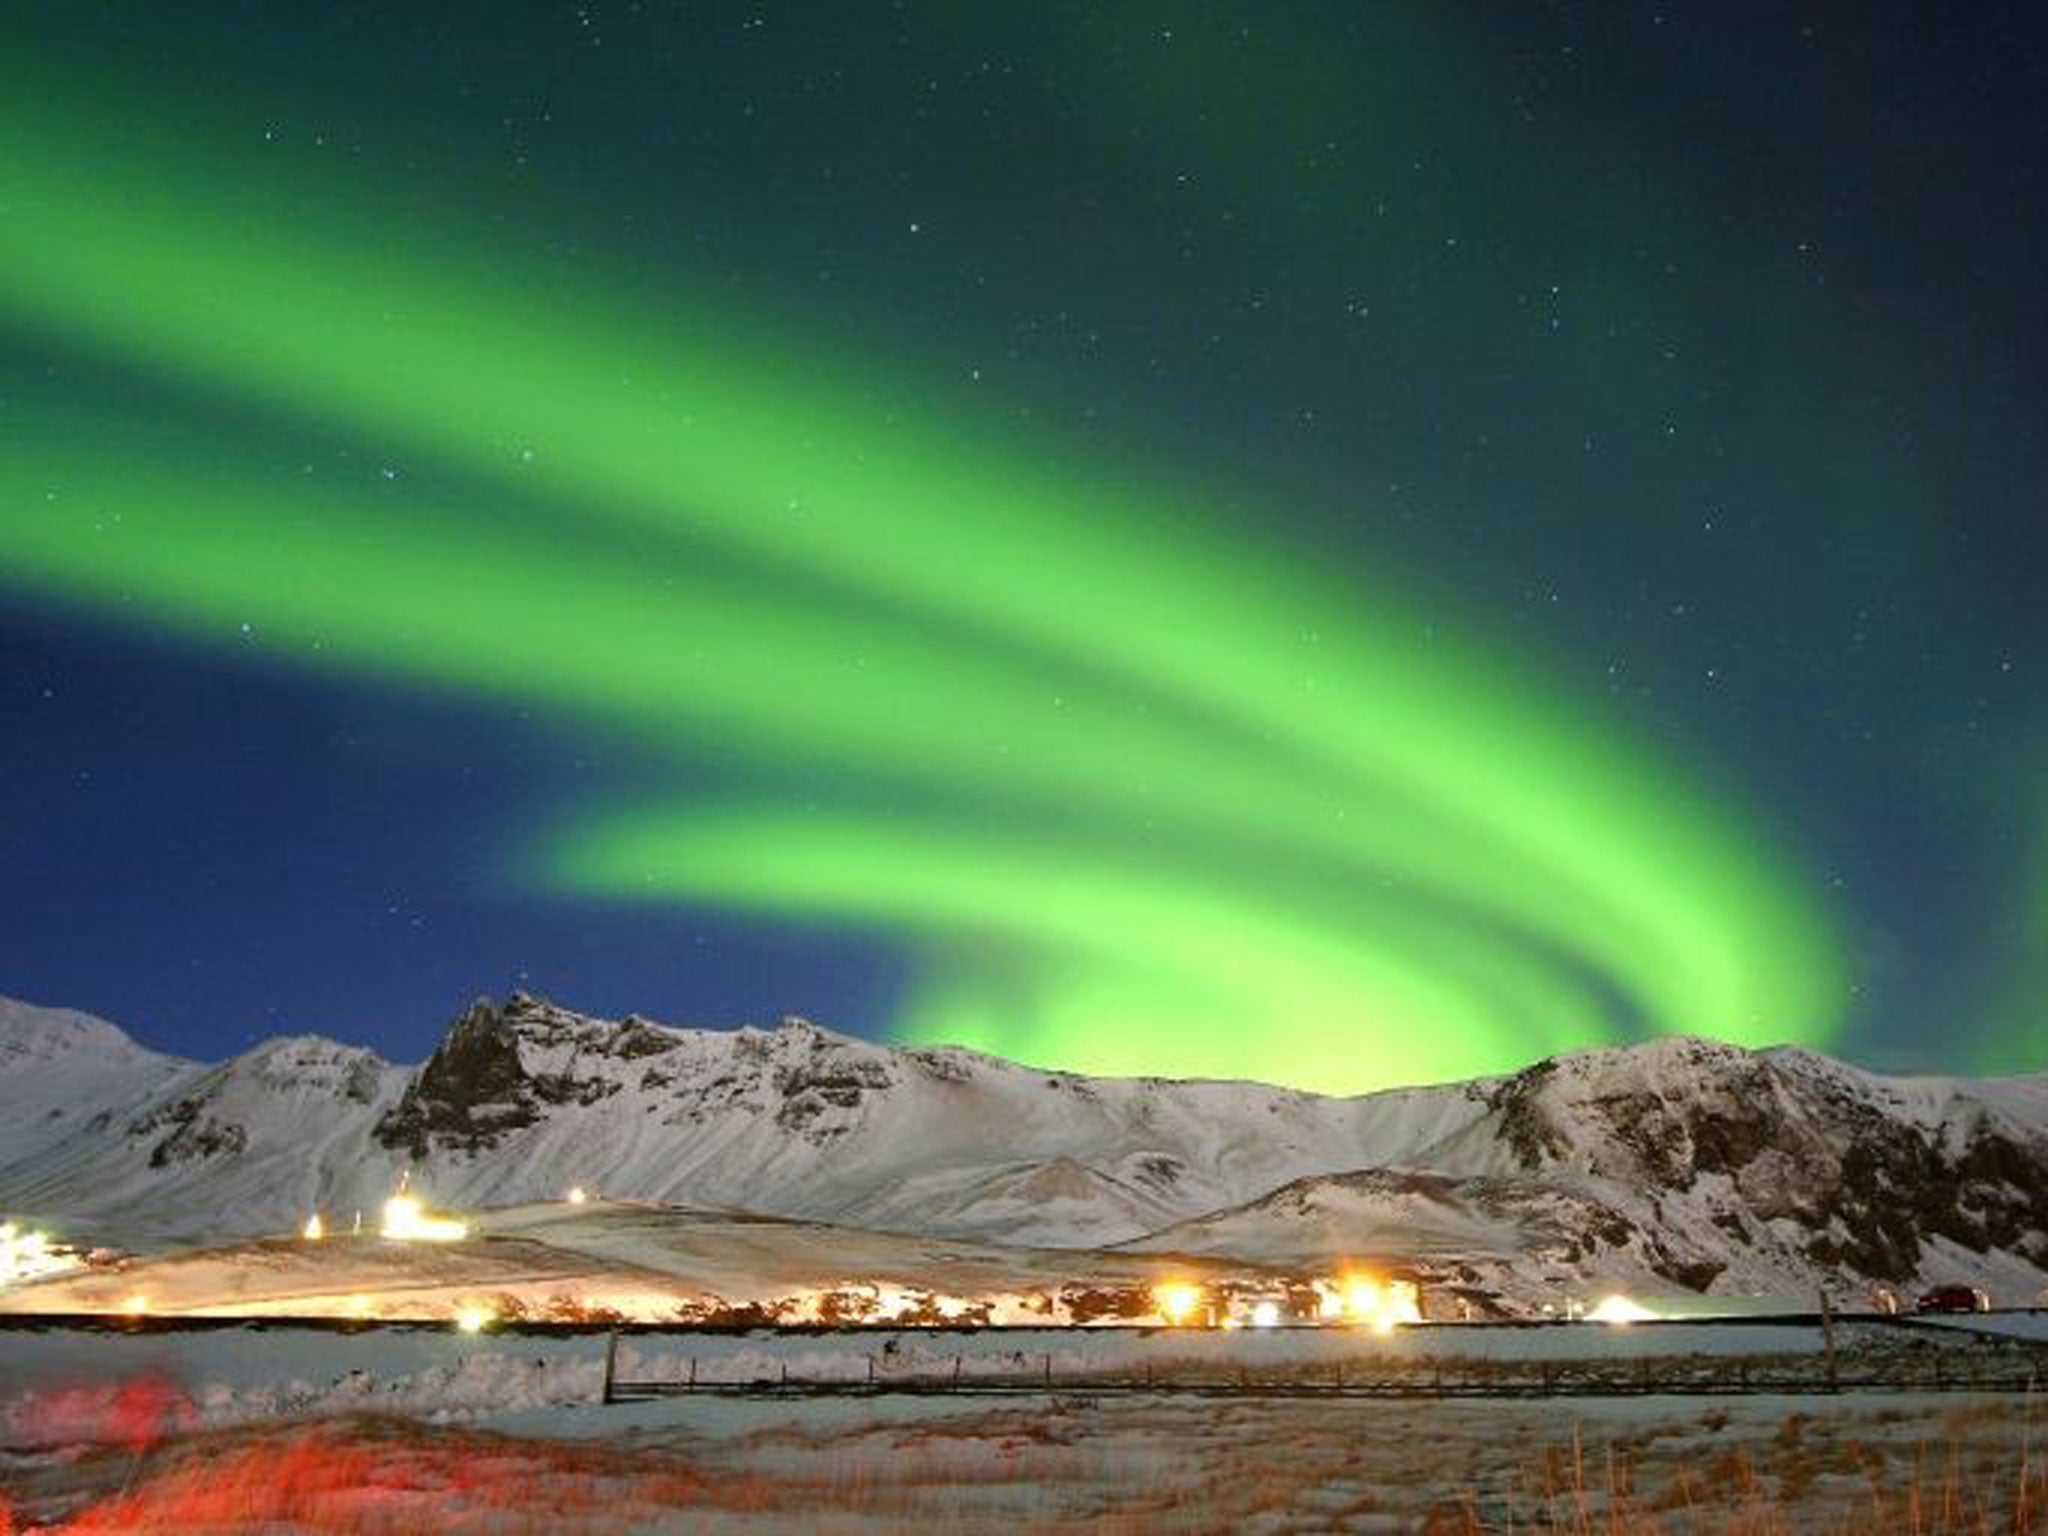 The northern lights in Keflavik: a change in Icelandair's flight schedule left a reader out of pocket